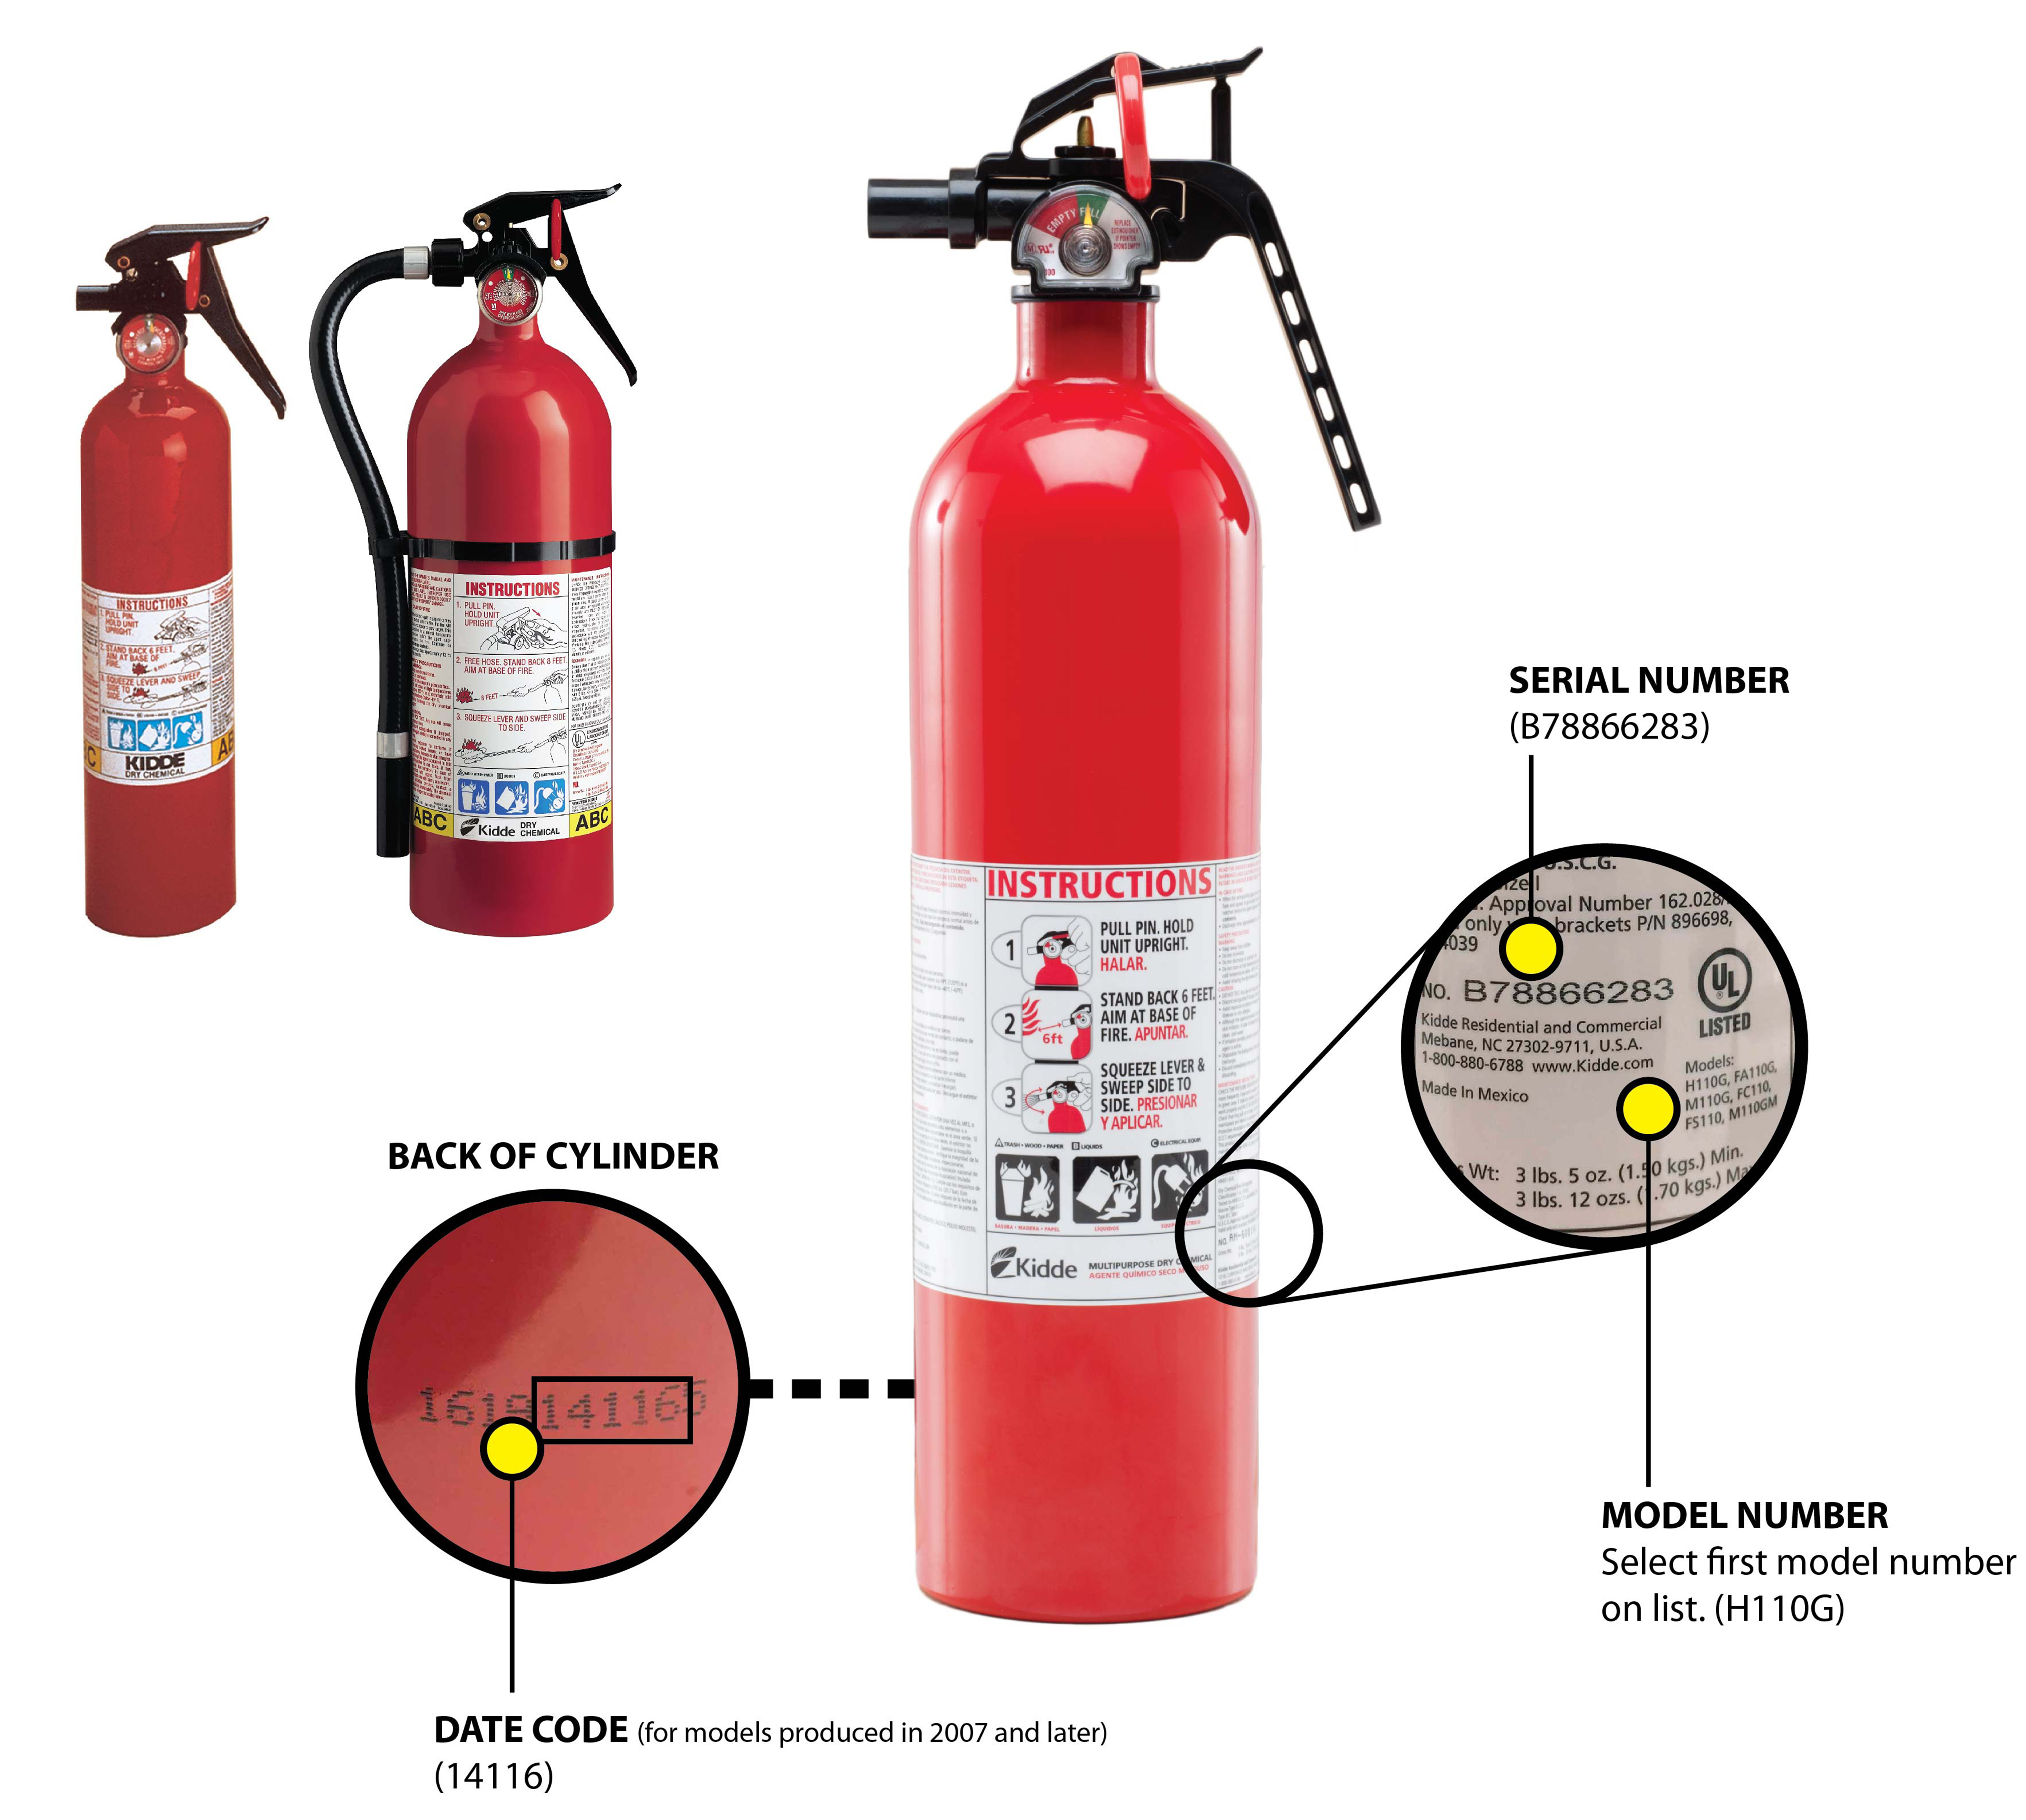 Kidde fire extinguishers with plastic handles